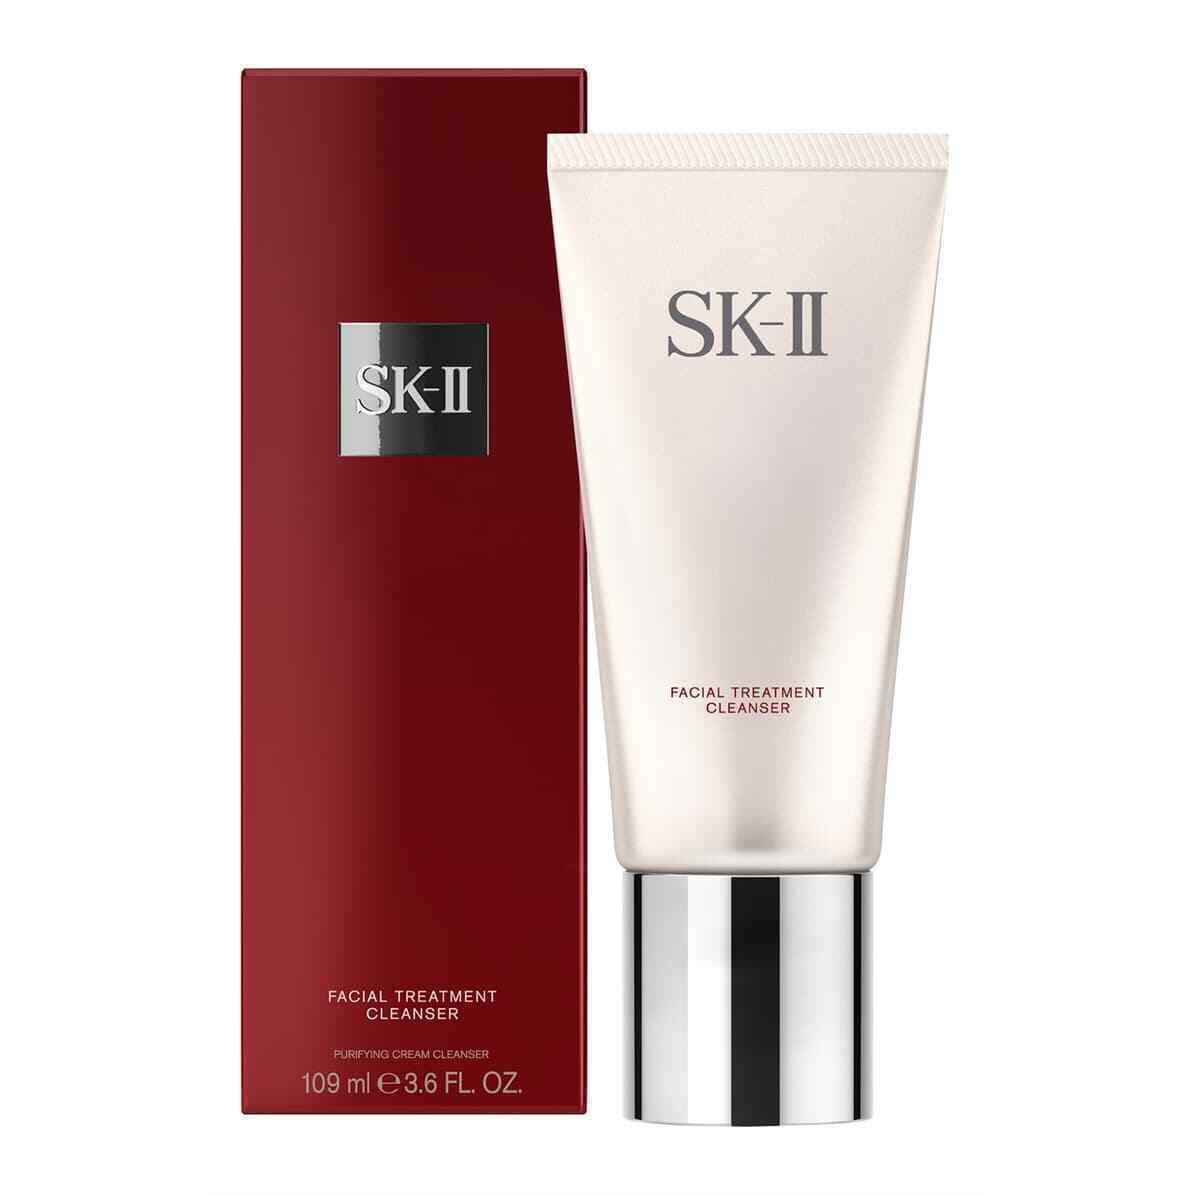 Sk-ii Facial Treatment Cleanser 3.6 Fl. oz